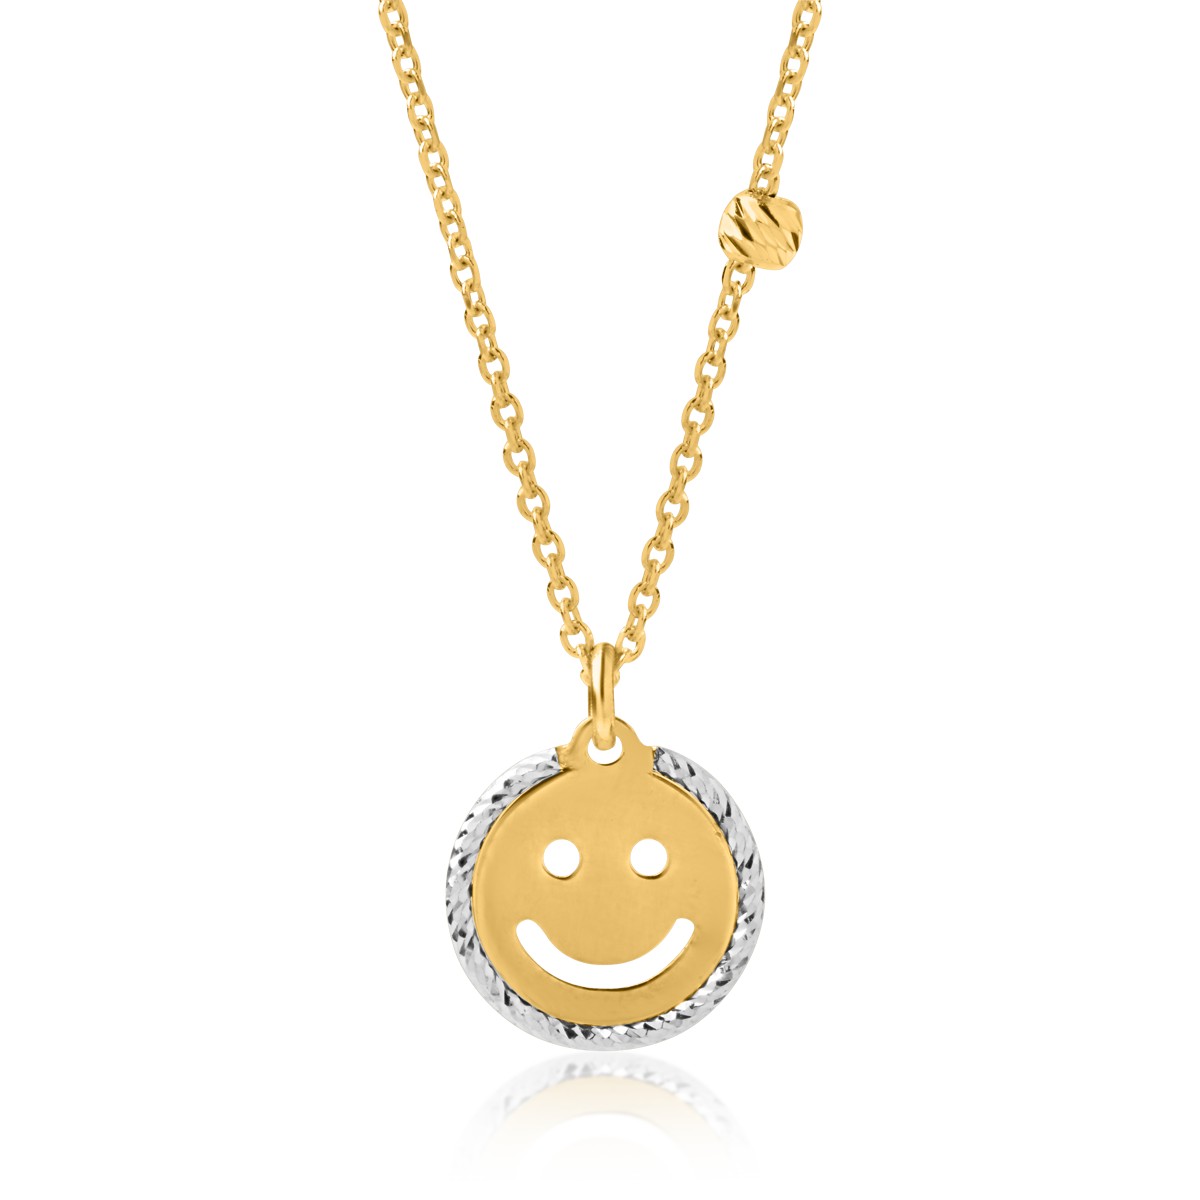 14K white-yellow gold pendant necklace